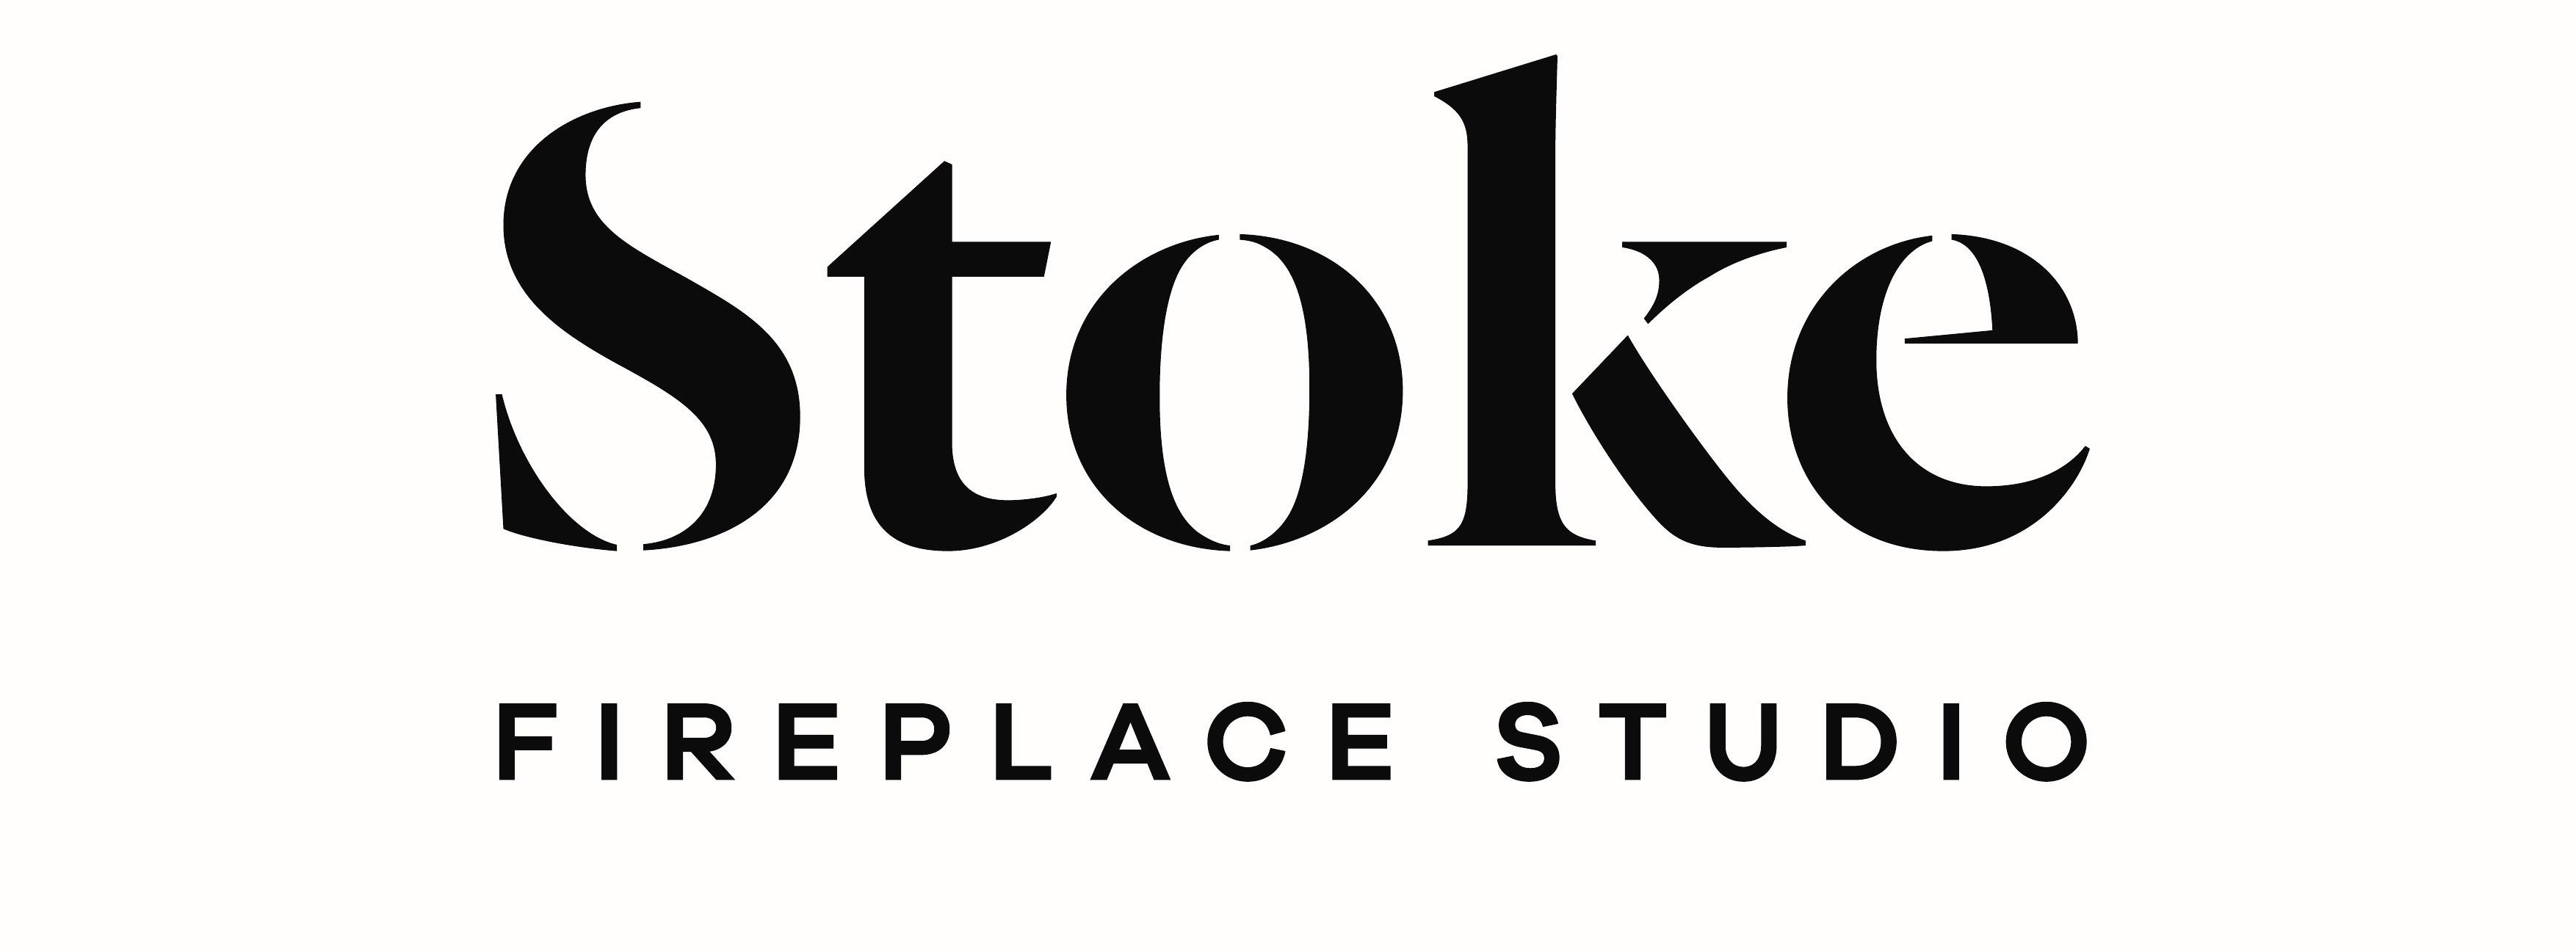 Stoke Fireplace Studio Ltd